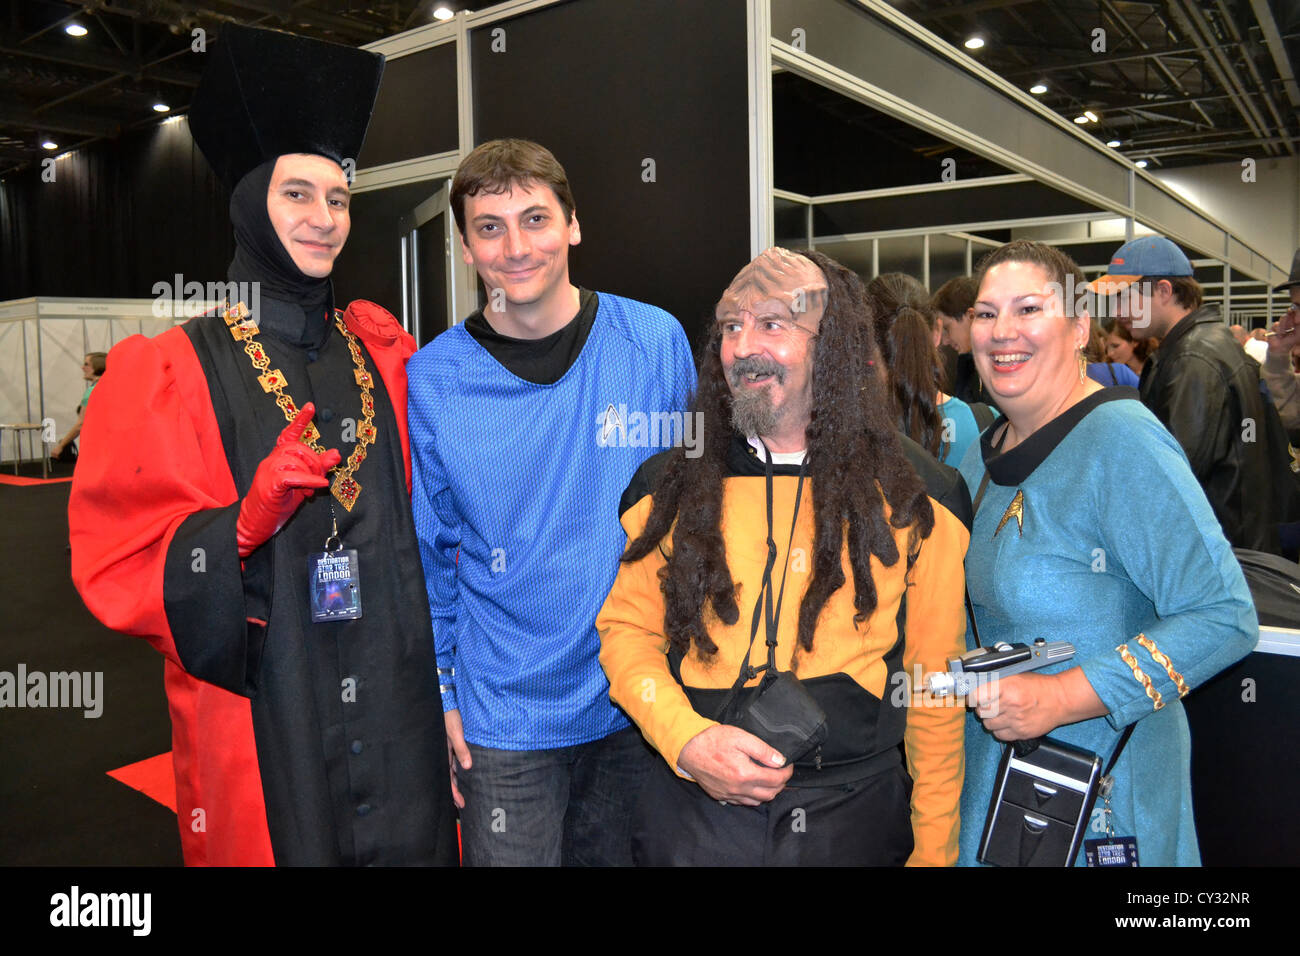 Star Trek fans dressed up at Star Trek convention, London Stock Photo -  Alamy